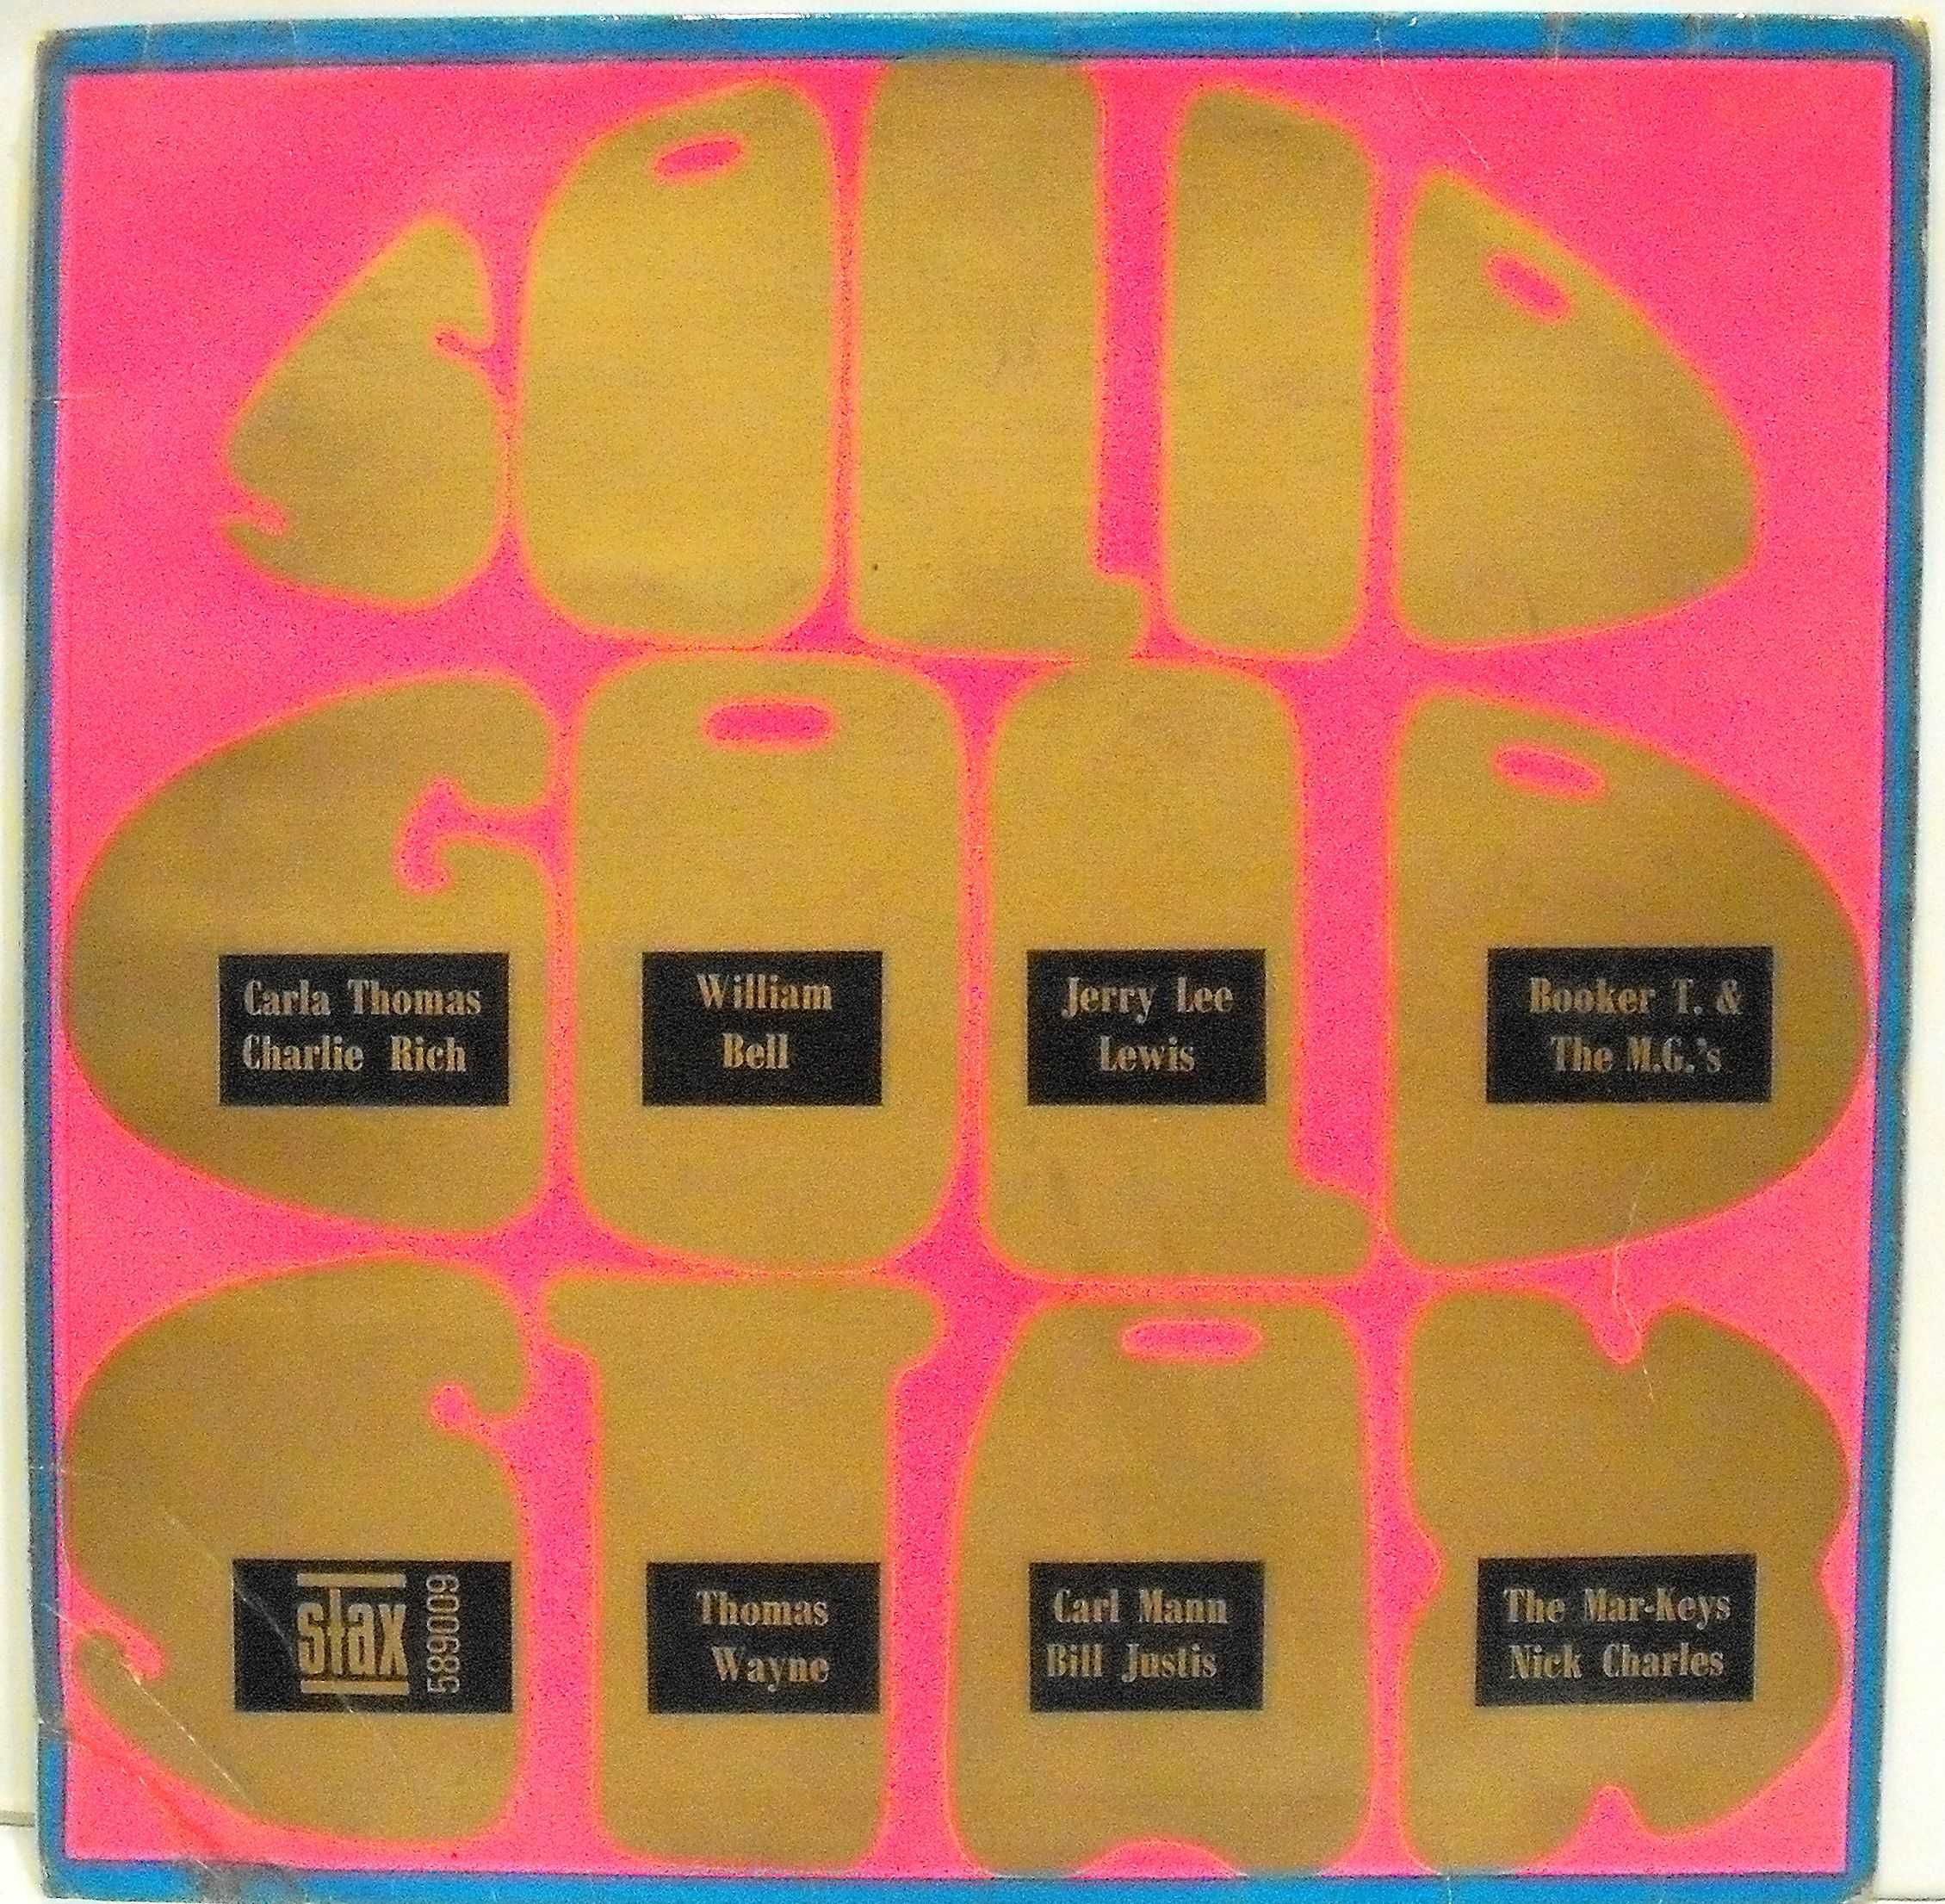 SOLID GOLD STAX Vinil LP 33 Rpm - 1967